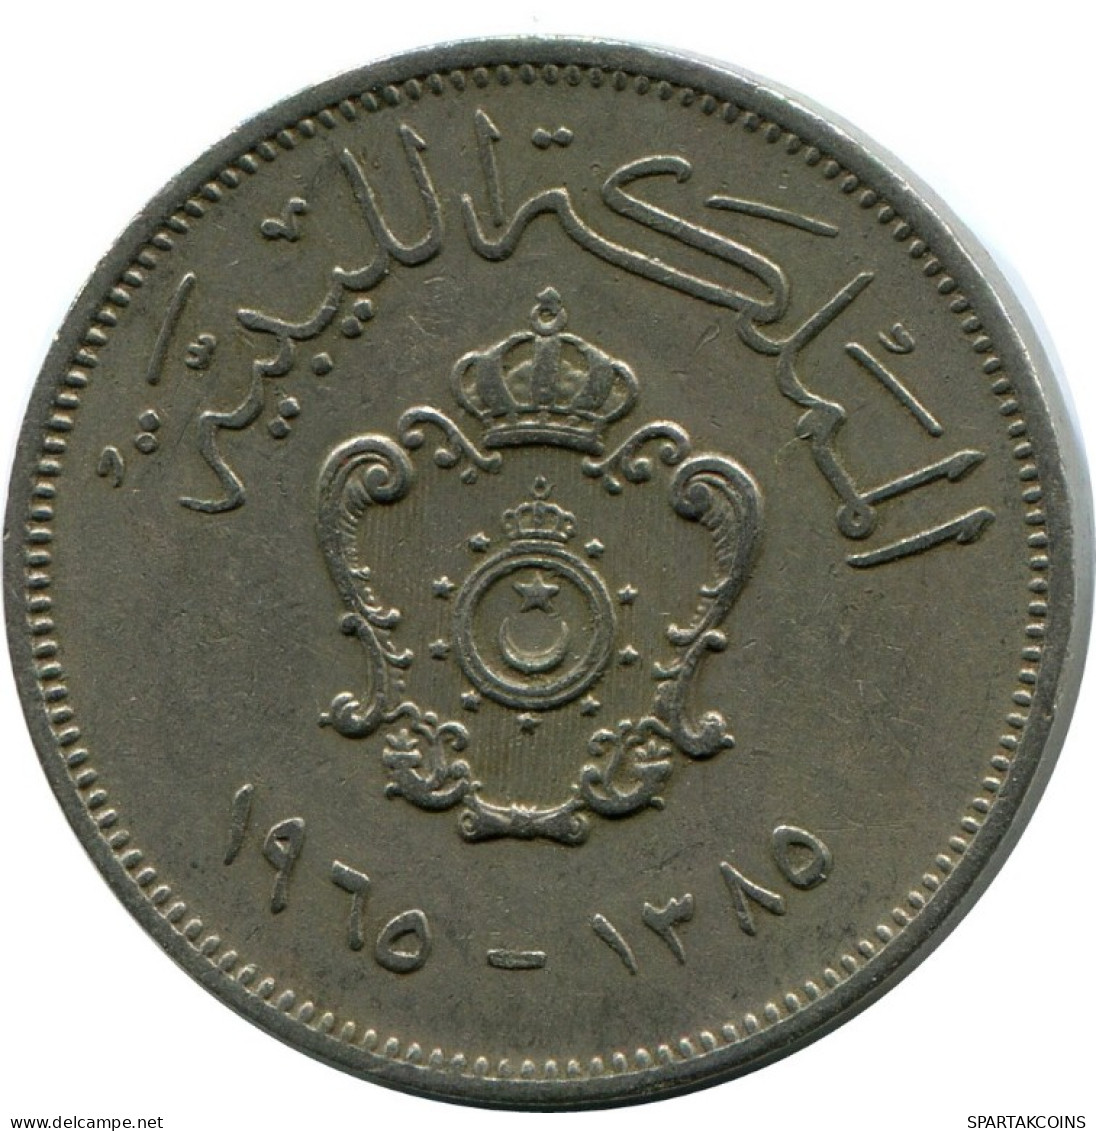 20 MILLIEMES 1965 LIBYA Islamic Coin #AK277.U.A - Libyen